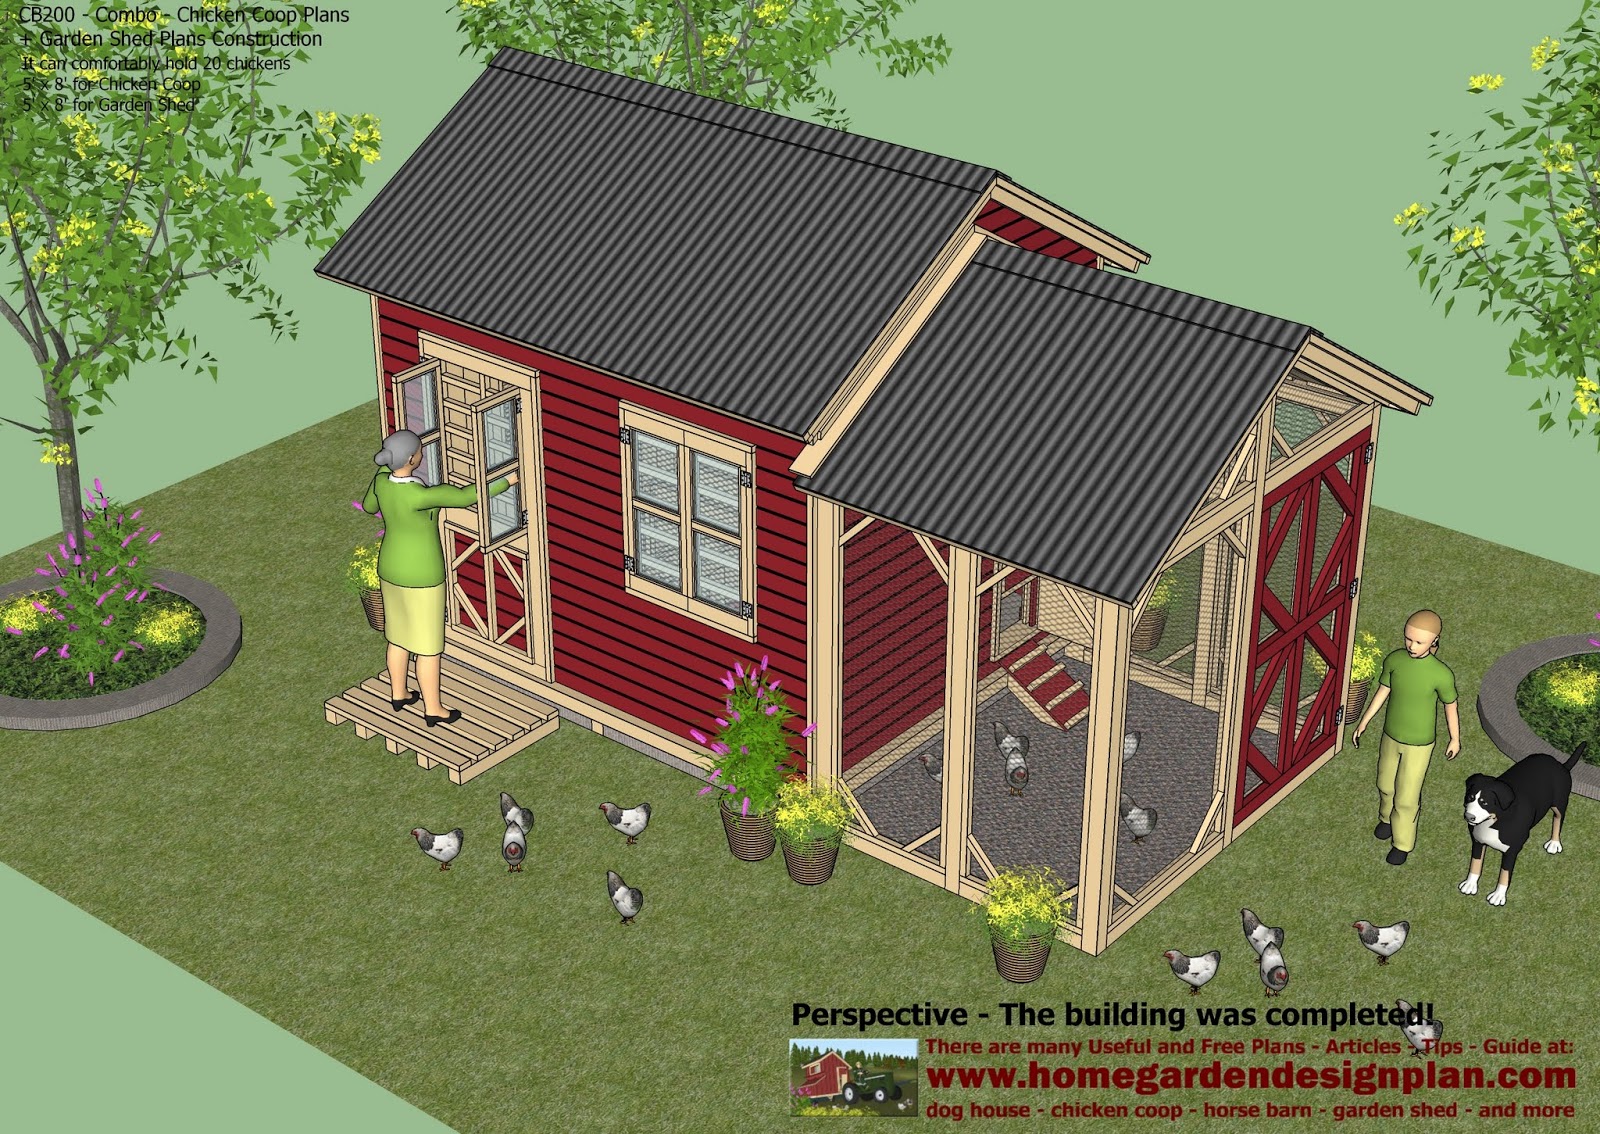 ... Plans - Chicken Coop Plans Construction + Garden Sheds - Storage Sheds